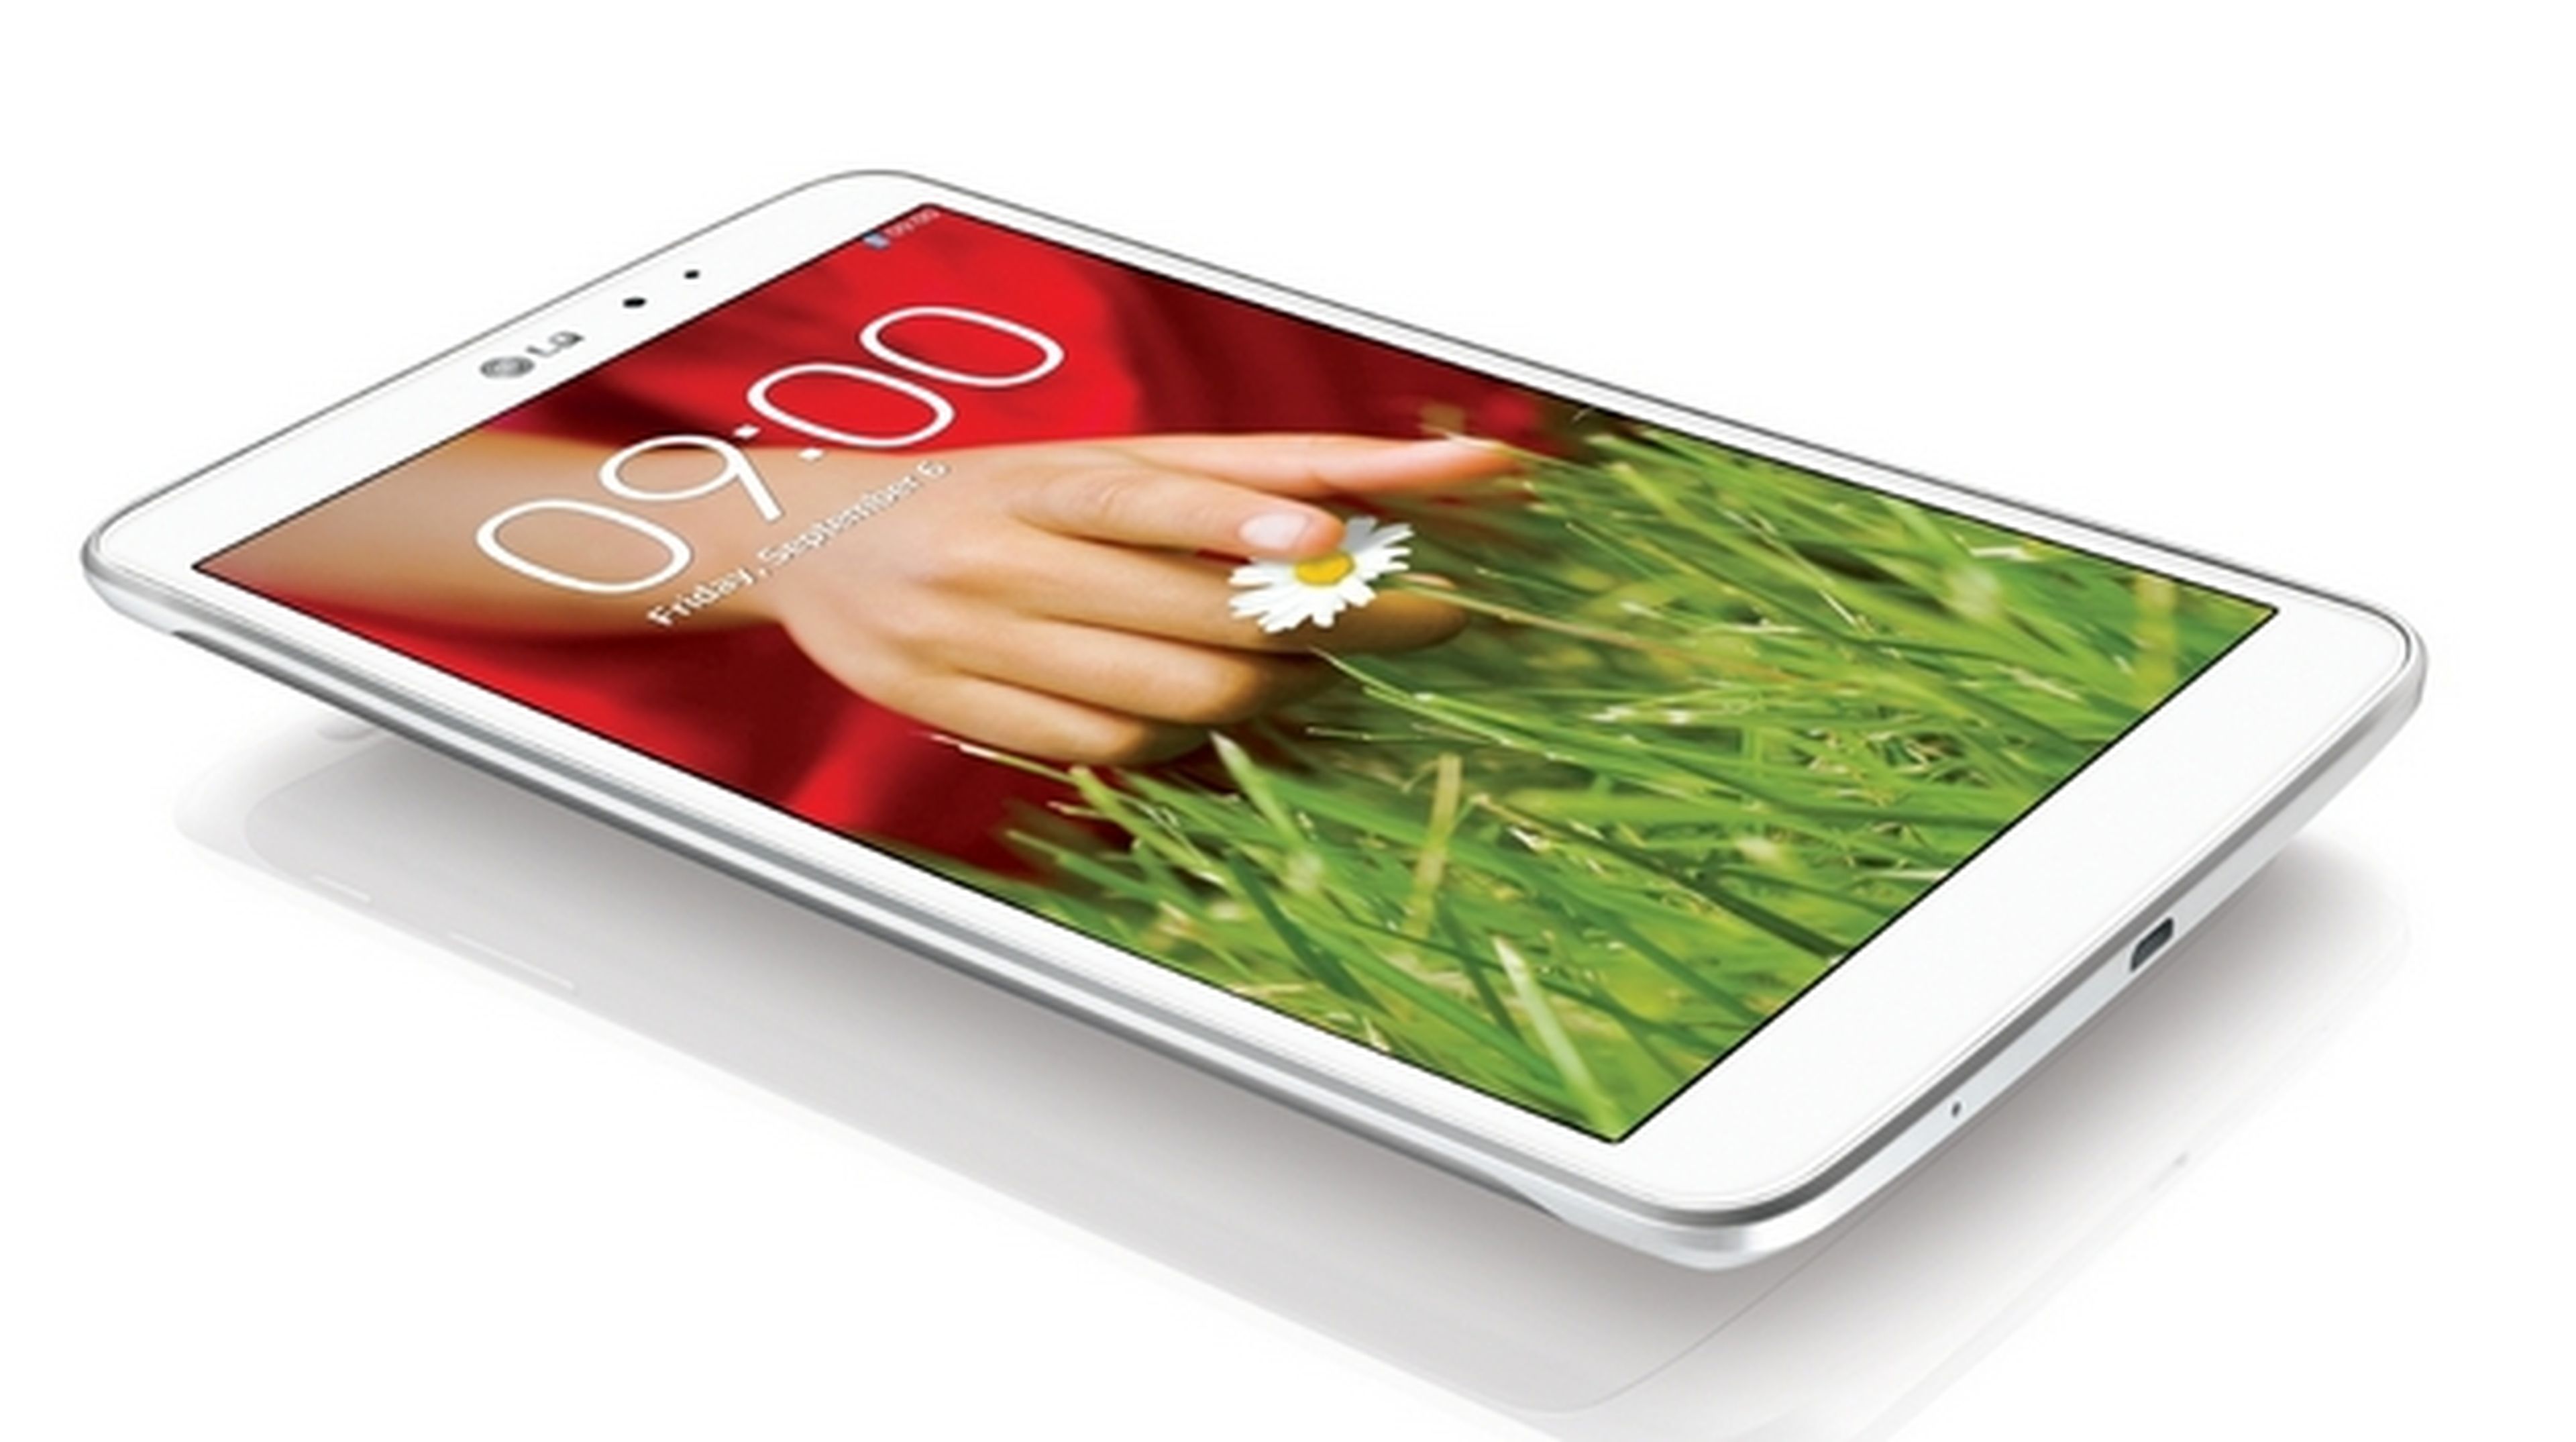 LG G Pad 8.3, la tablet de 8 pulgadas FullHD, ya a la venta en España